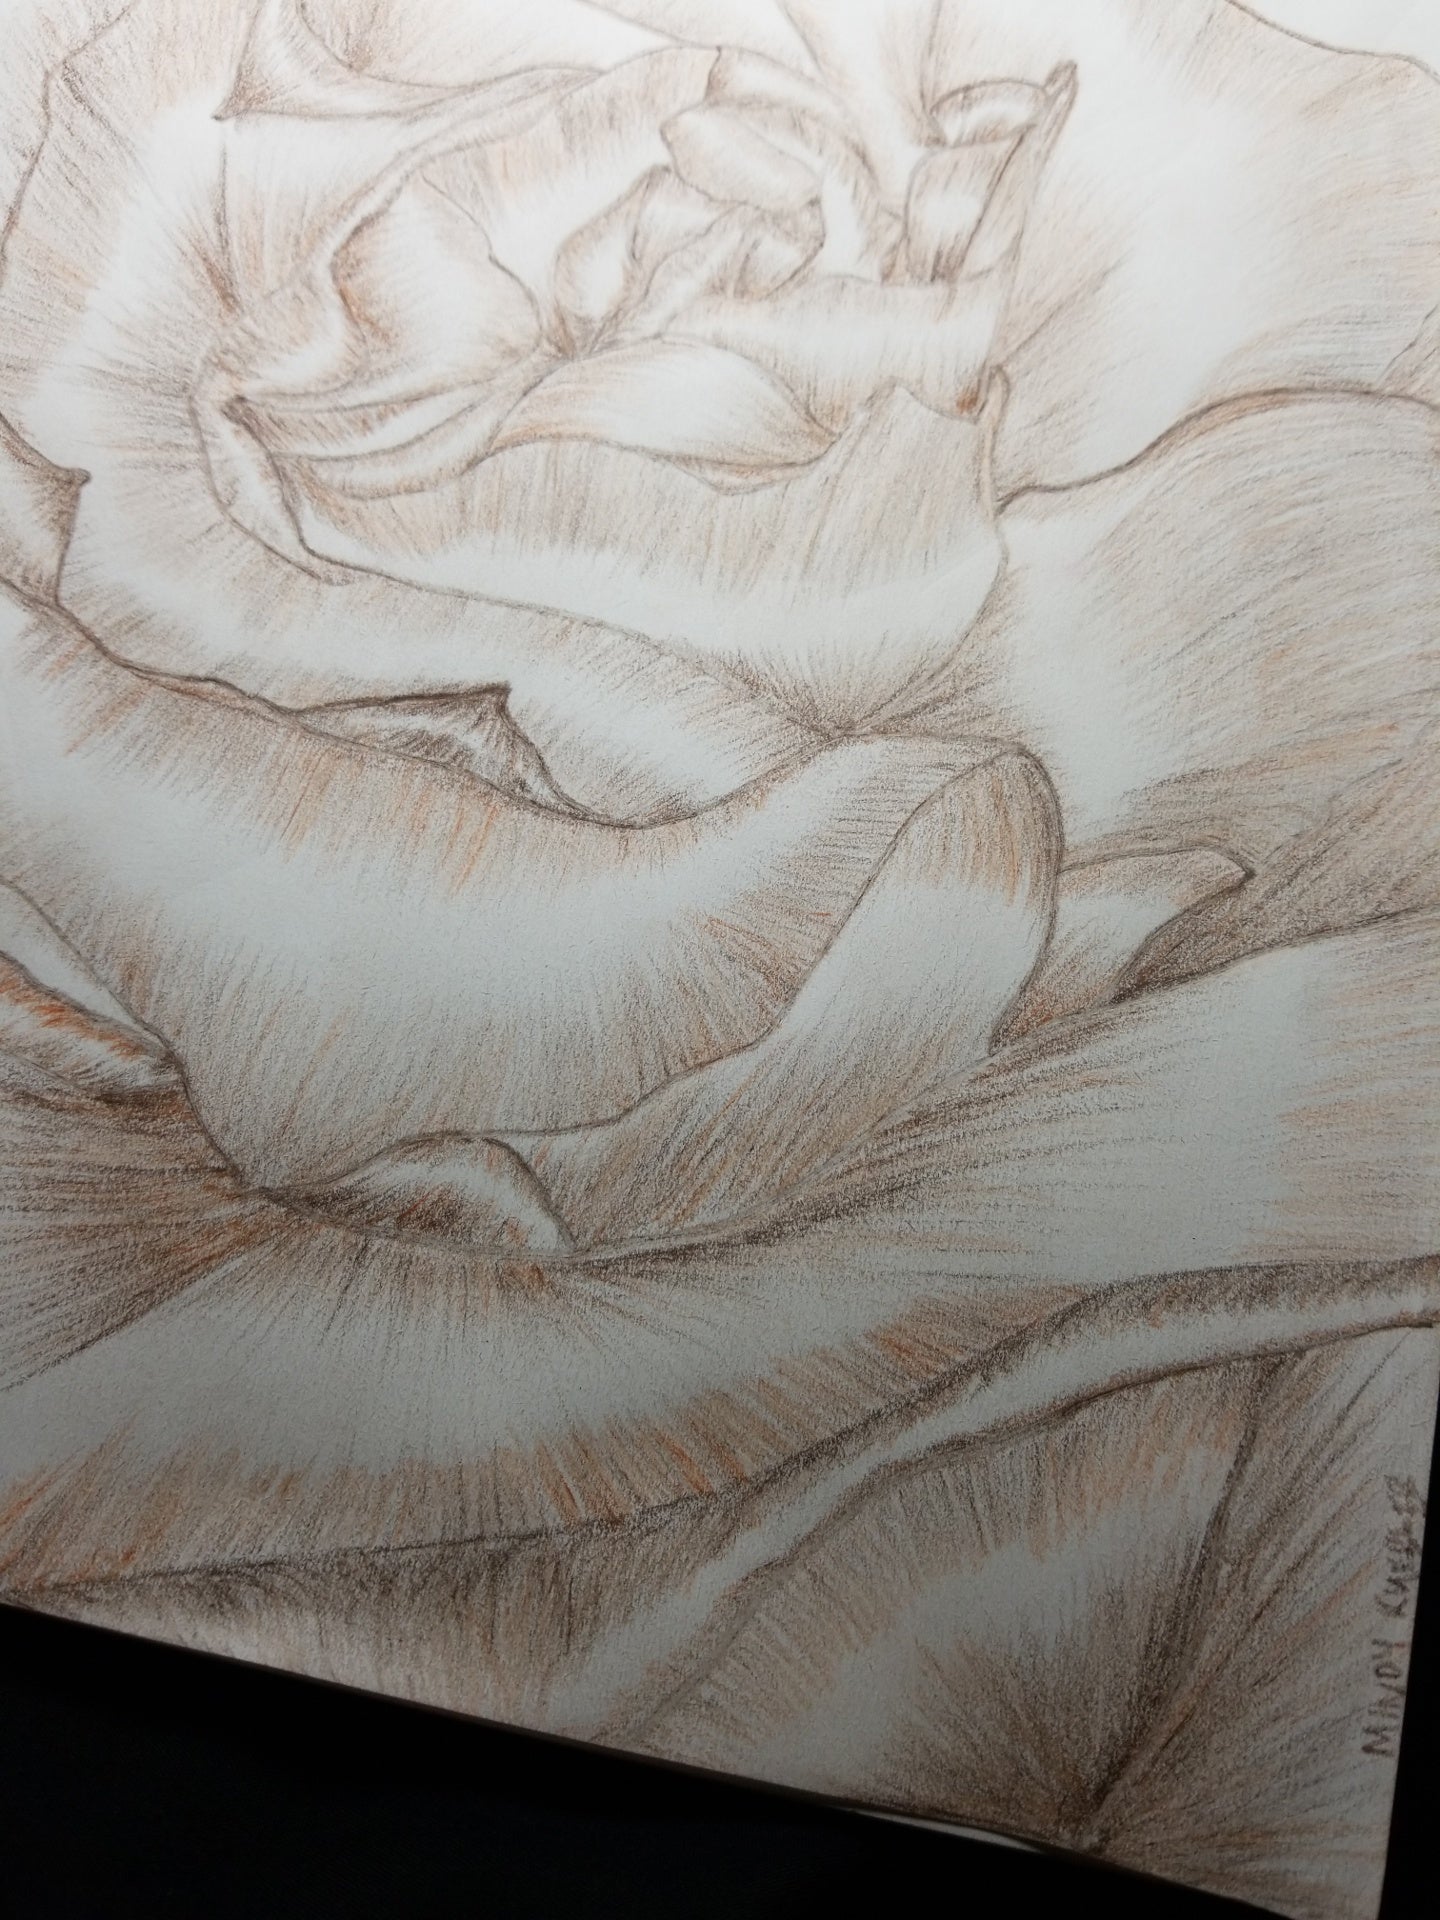 Floribunda Rose Drawing